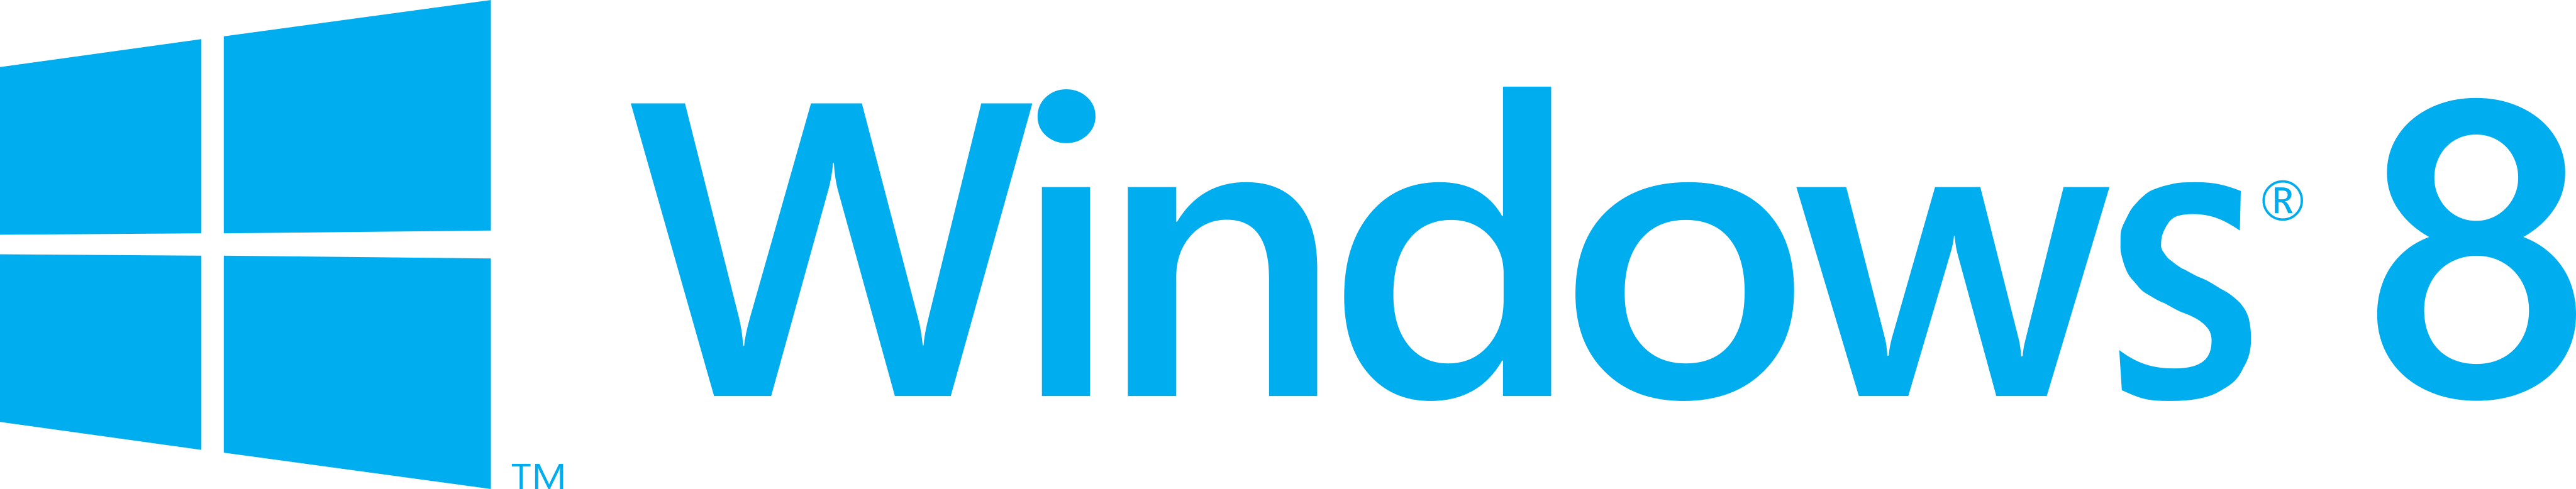 windows 8 logo 1 - Windows 8 Logo